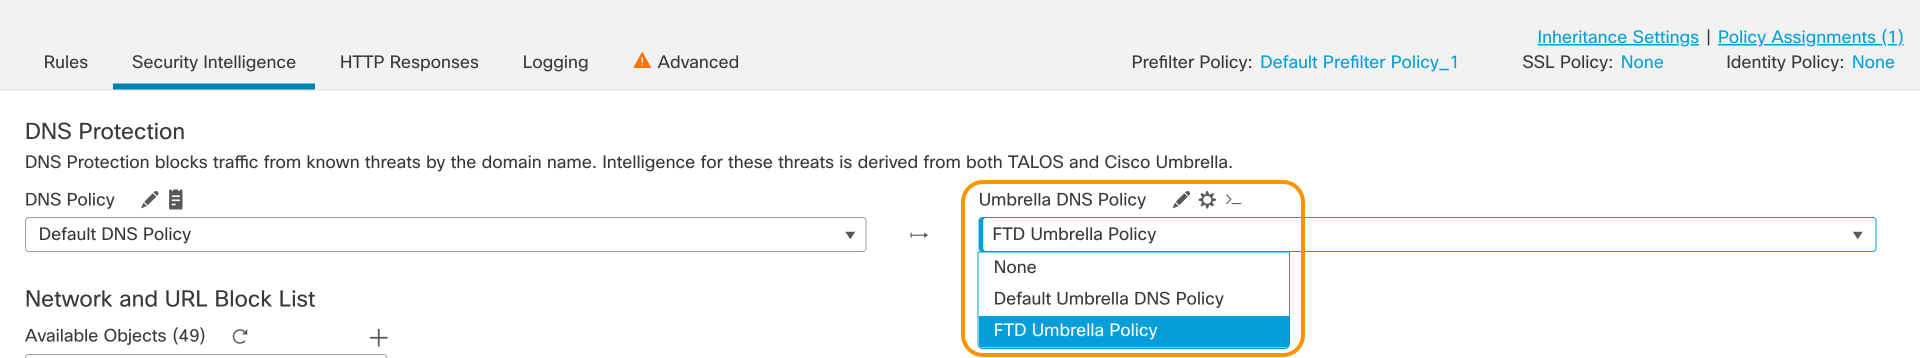 Umbrella DNS Policy assignment